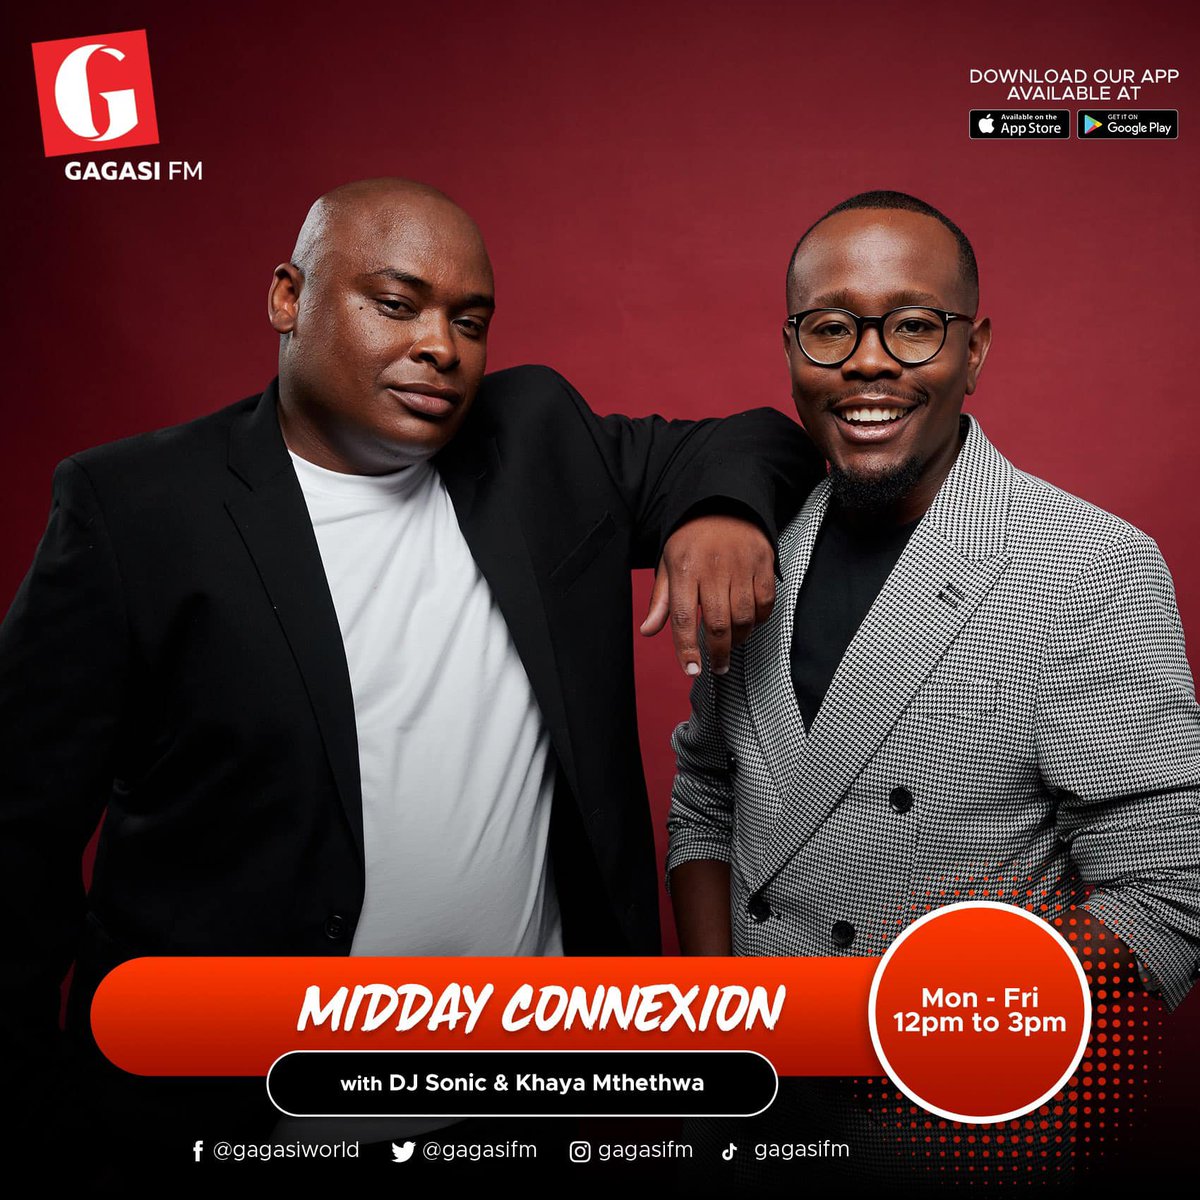 Abafana abahle are back on your airwaves for the #MCM Edition of The Midday Connexion. 🎙️ Dj Sonic SA | Khaya Mthethwa SA ☎️: 0861 596 596 📱: 078 934 282 💻: gagasi995.co.za #MiddayConnexion #GagasiFM #iRadioImnadiEmini💐